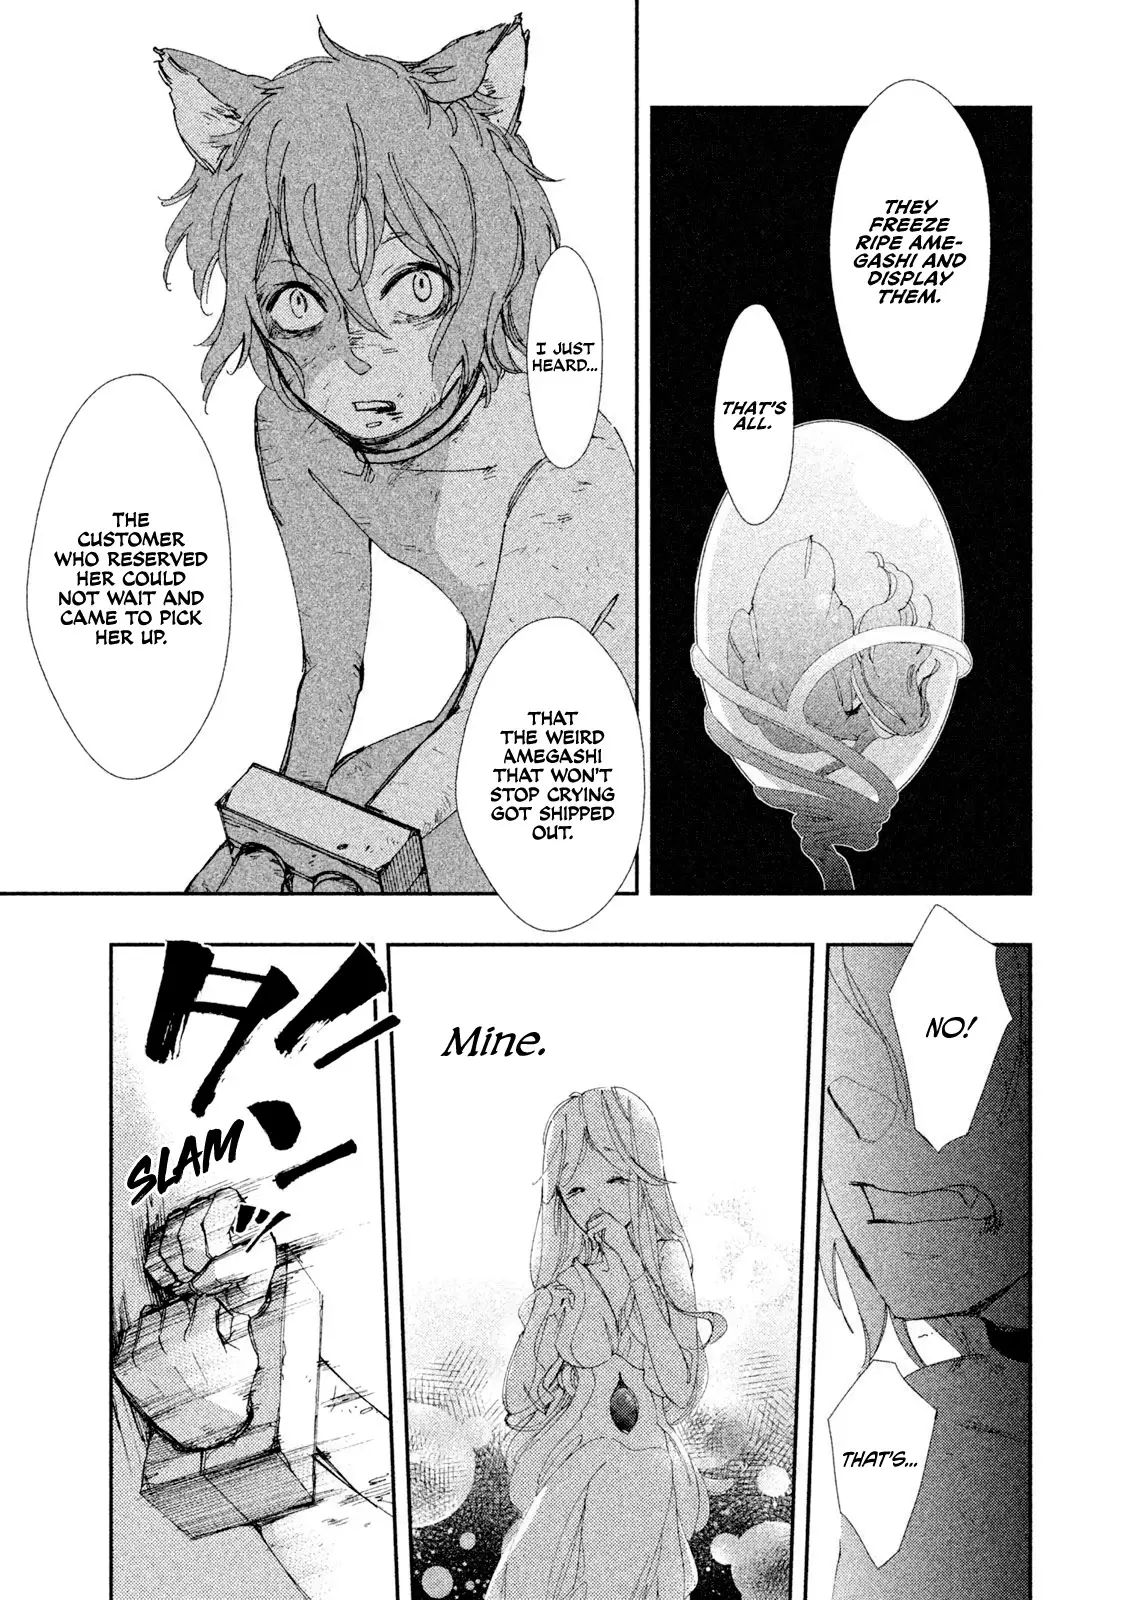 Amegashi - 4 page 23